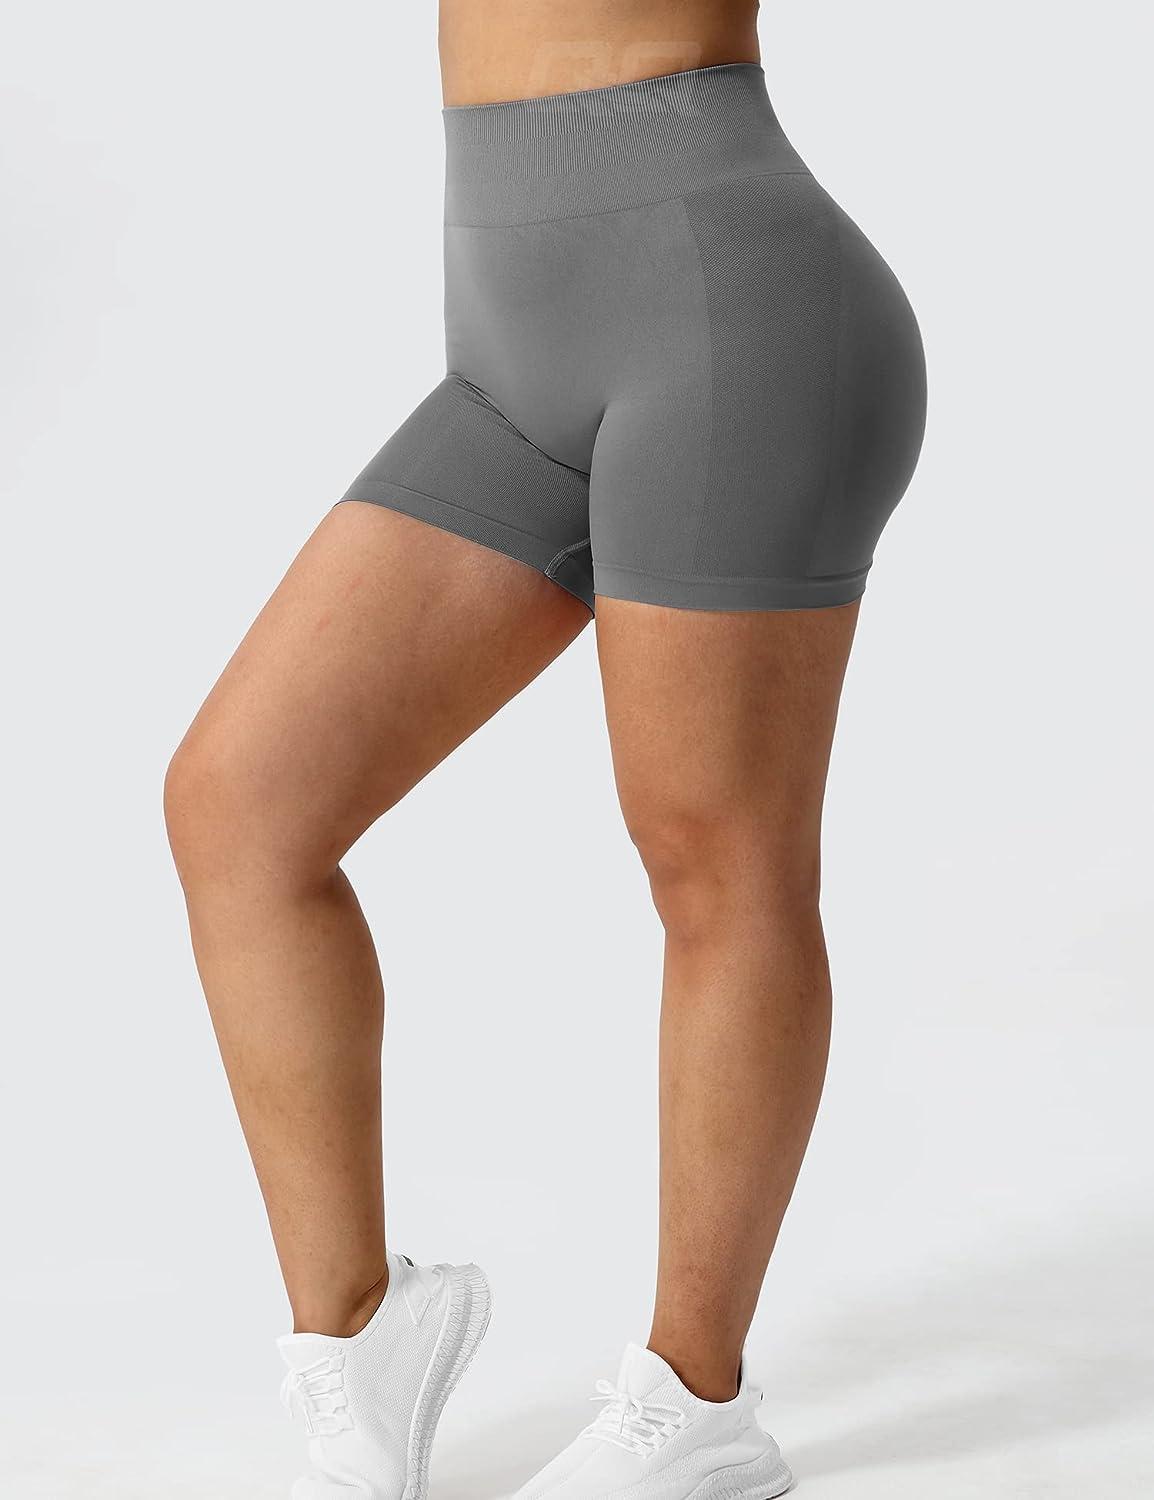 QOQ Womens Workout Biker Shorts Seamless High Waisted Tummy Control  Slimming Athletic Gym Yoga Pants